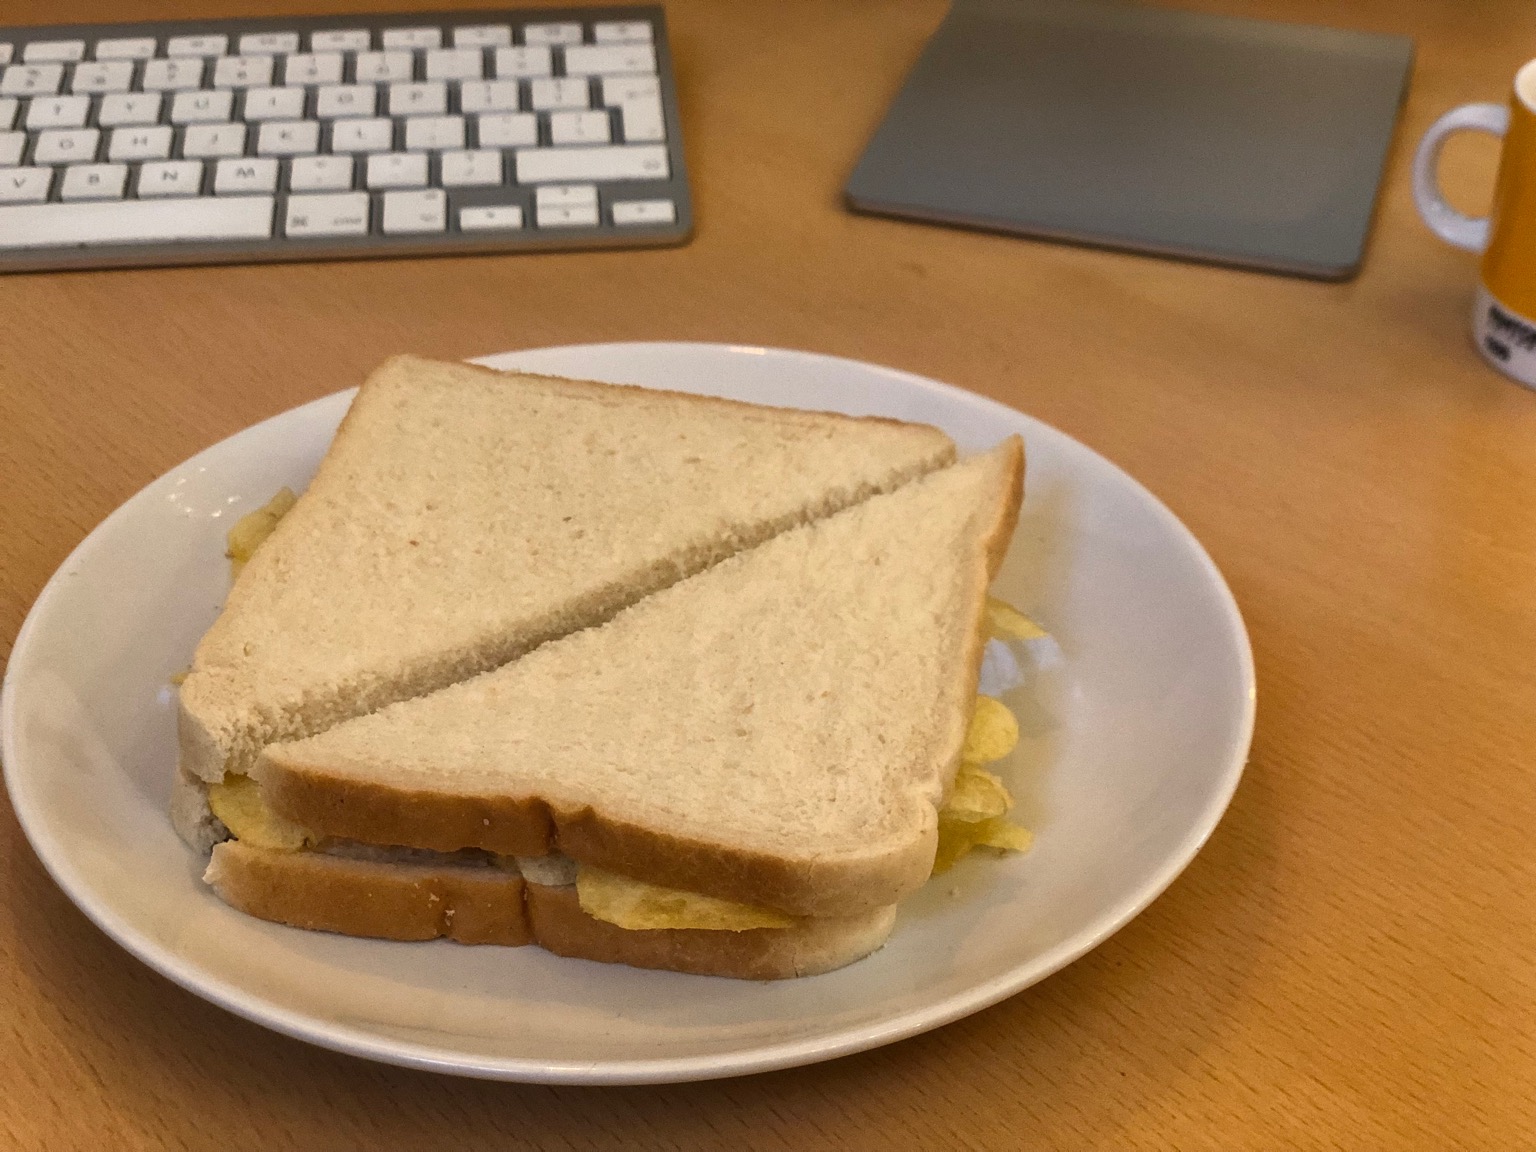 White diagonally-cut crisp sandwich on a desk